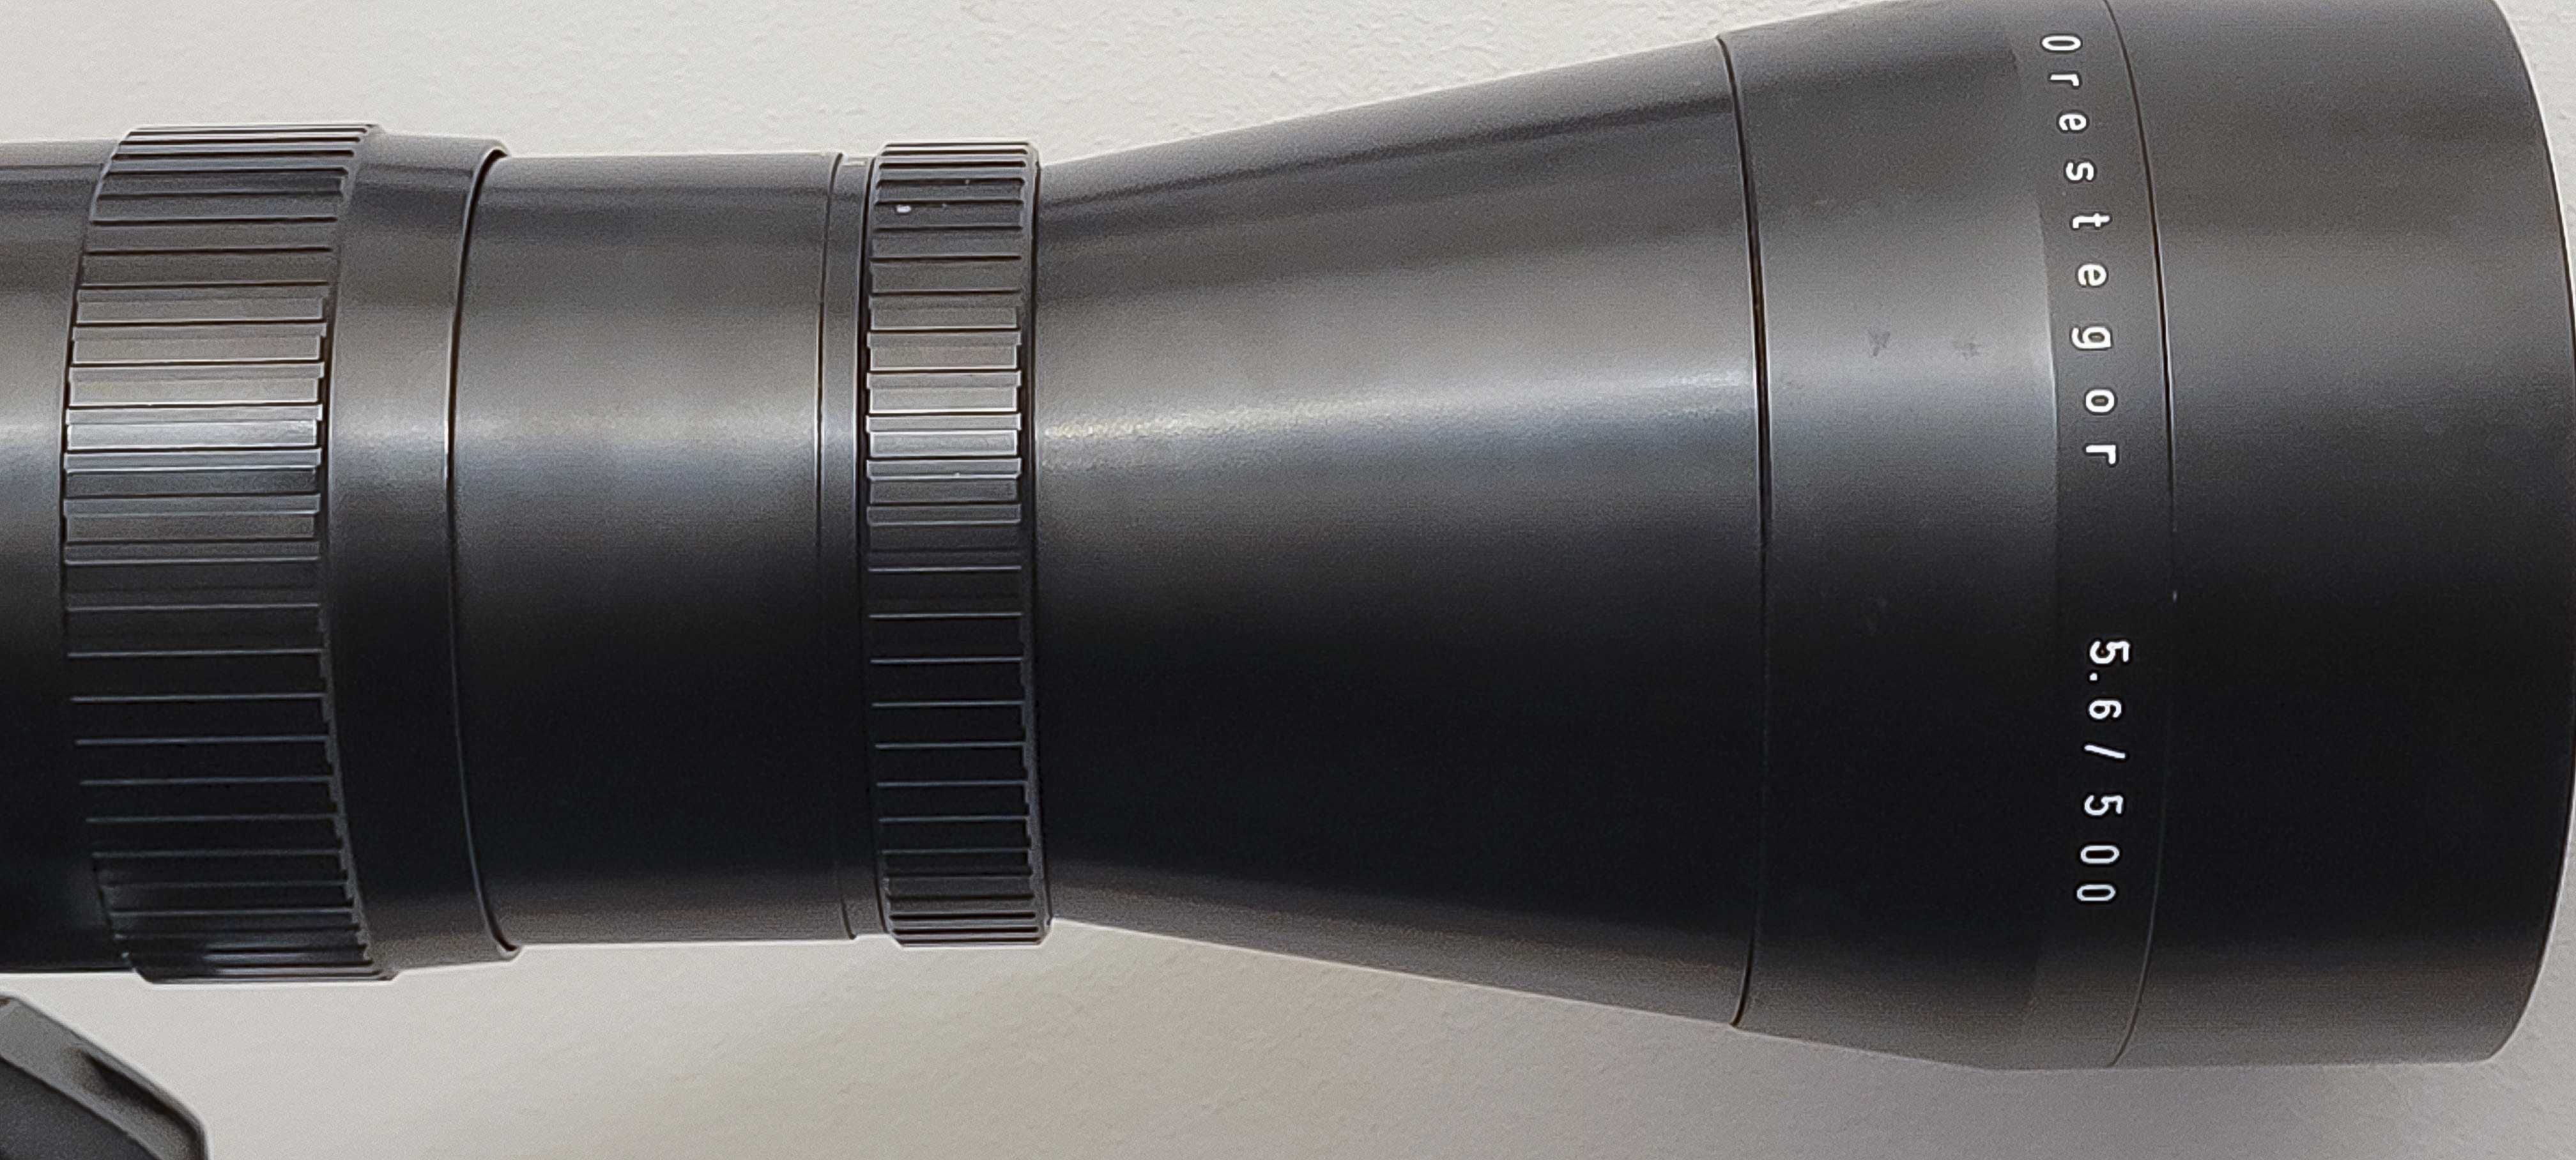 Obiectiv Meyer-Optik Görlitz Orestegor 500mm F5,6, M42 + CADOURI